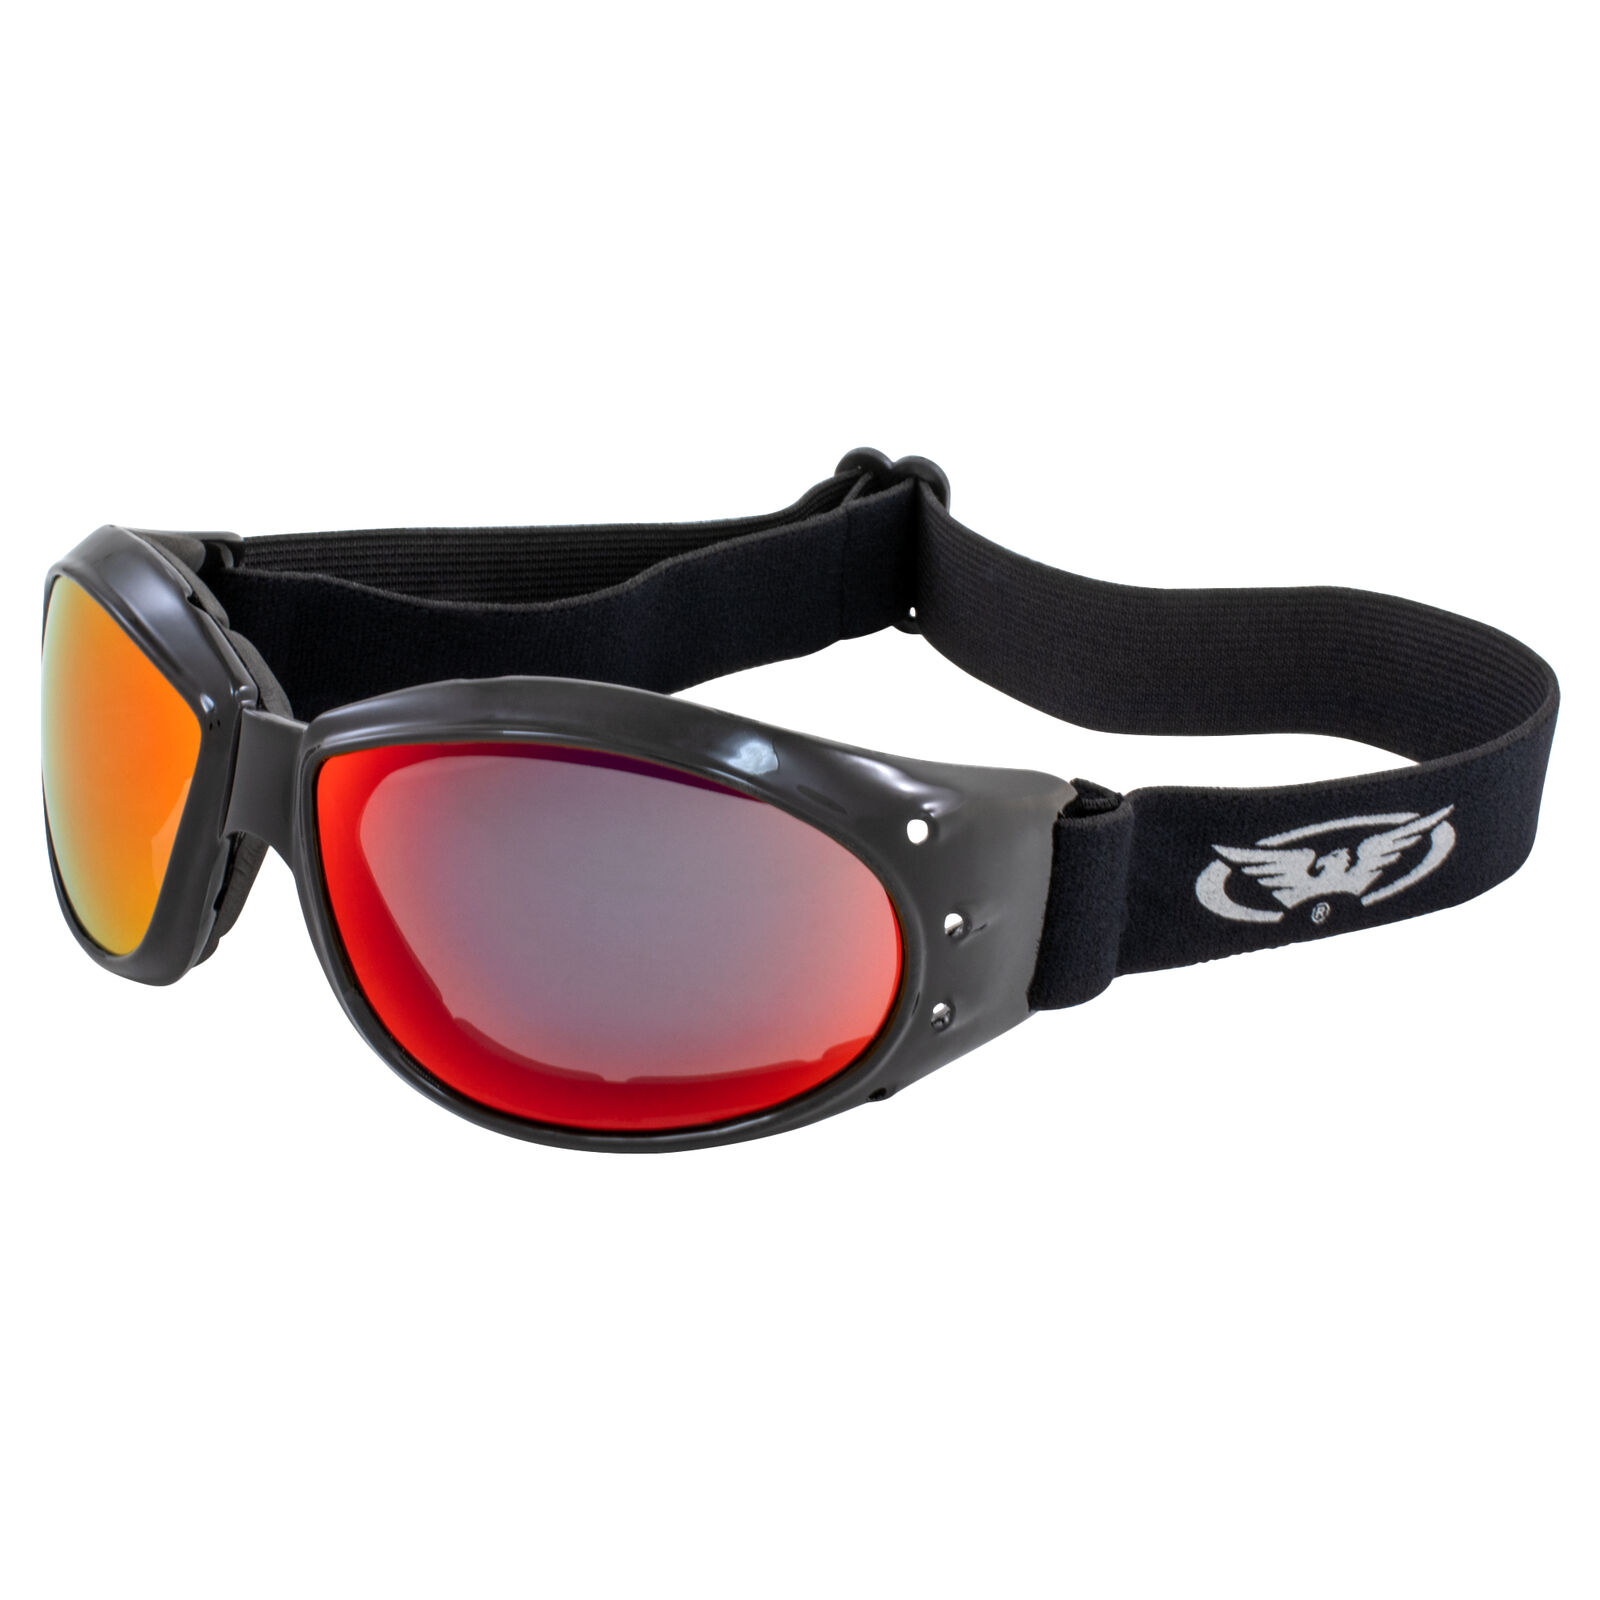 Global Vision Eliminator Motocycle Riding Goggles Black Frames Red Mirror Lens